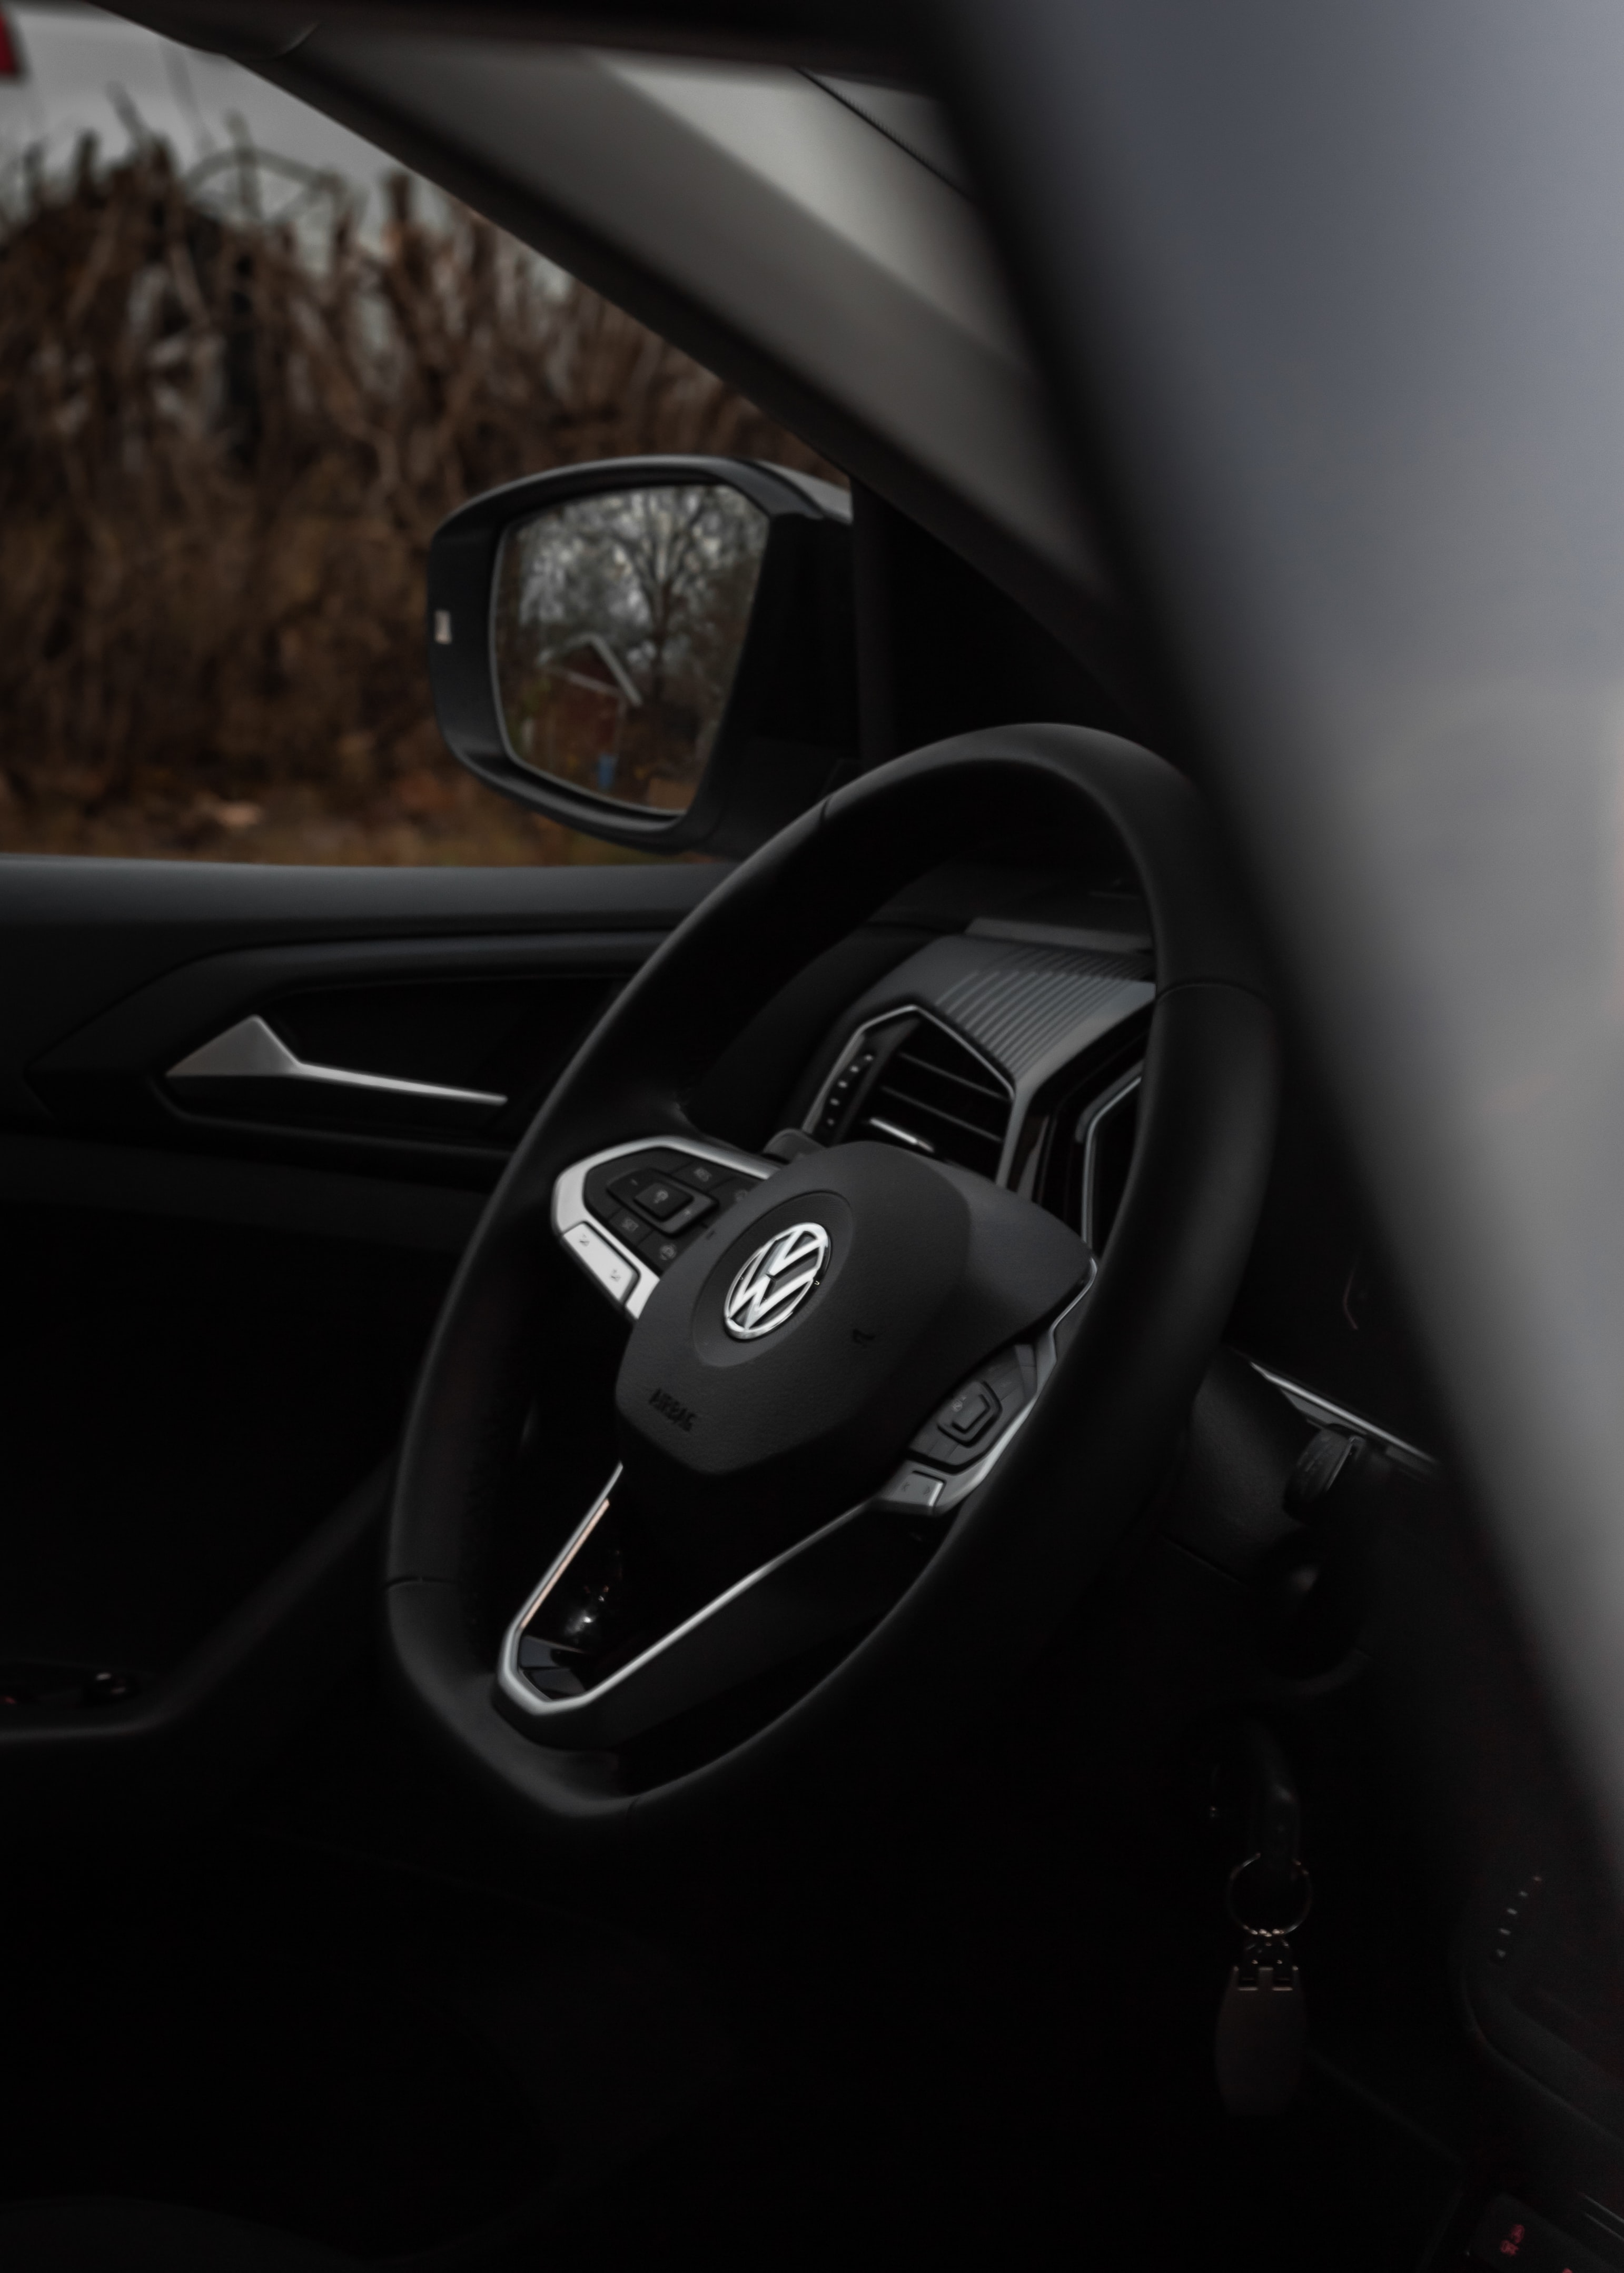 volkswagen, cars, black, car, steering wheel, rudder iphone wallpaper